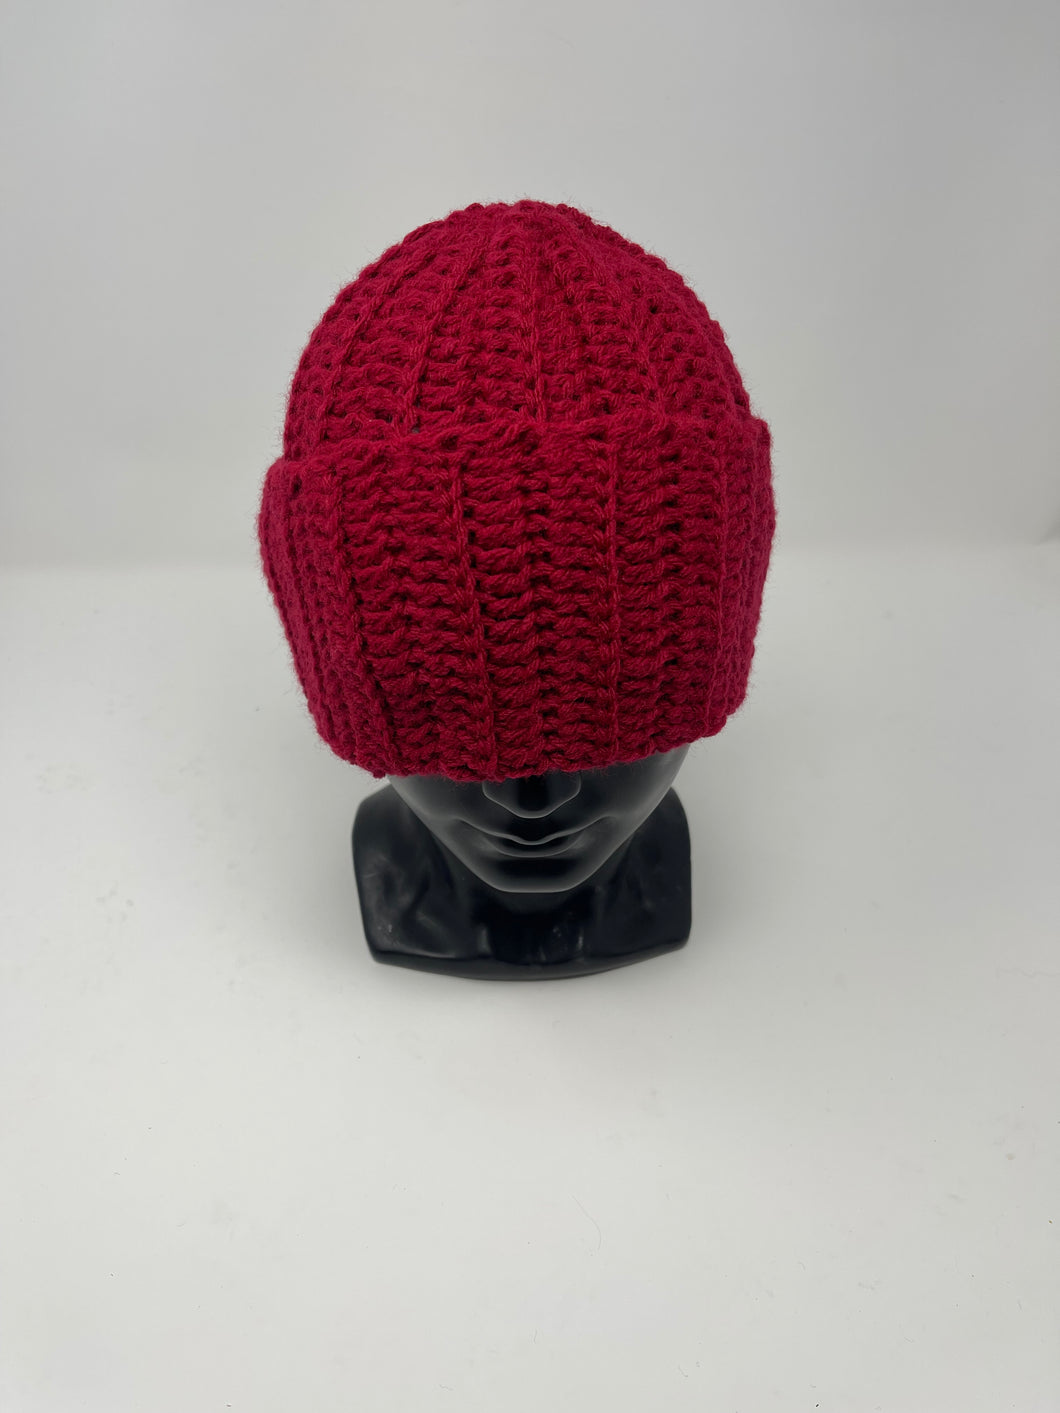 Crochet burgundy hat